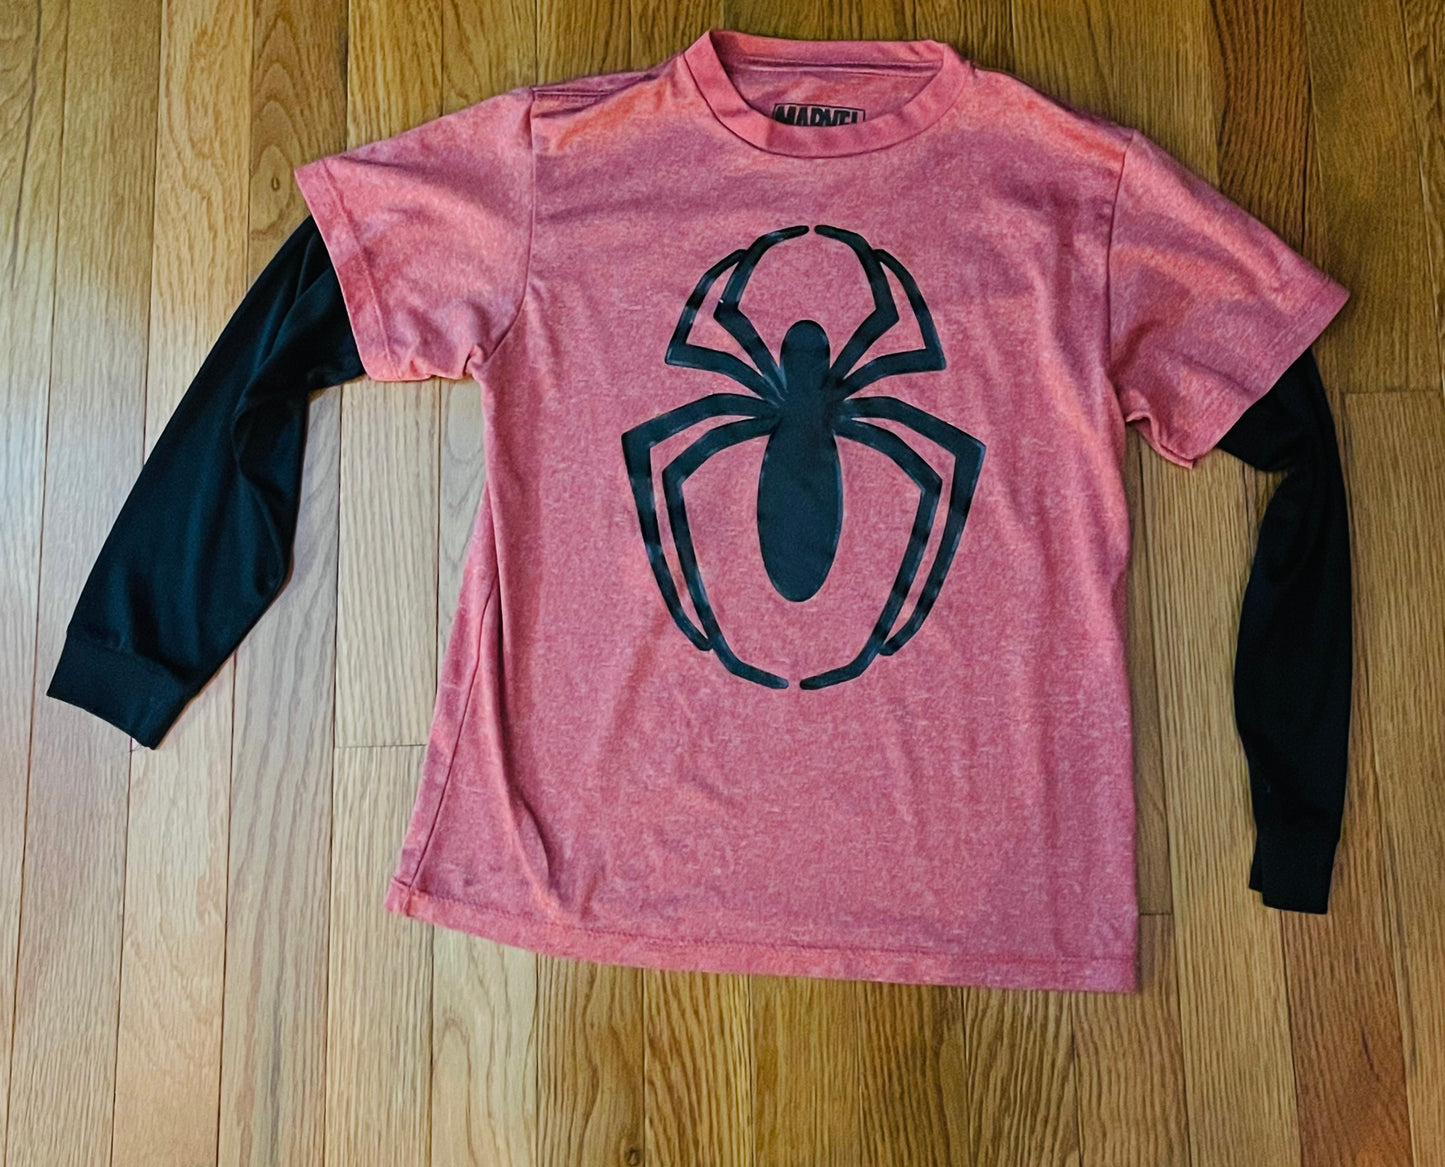 Spiderman shirt size small- boys